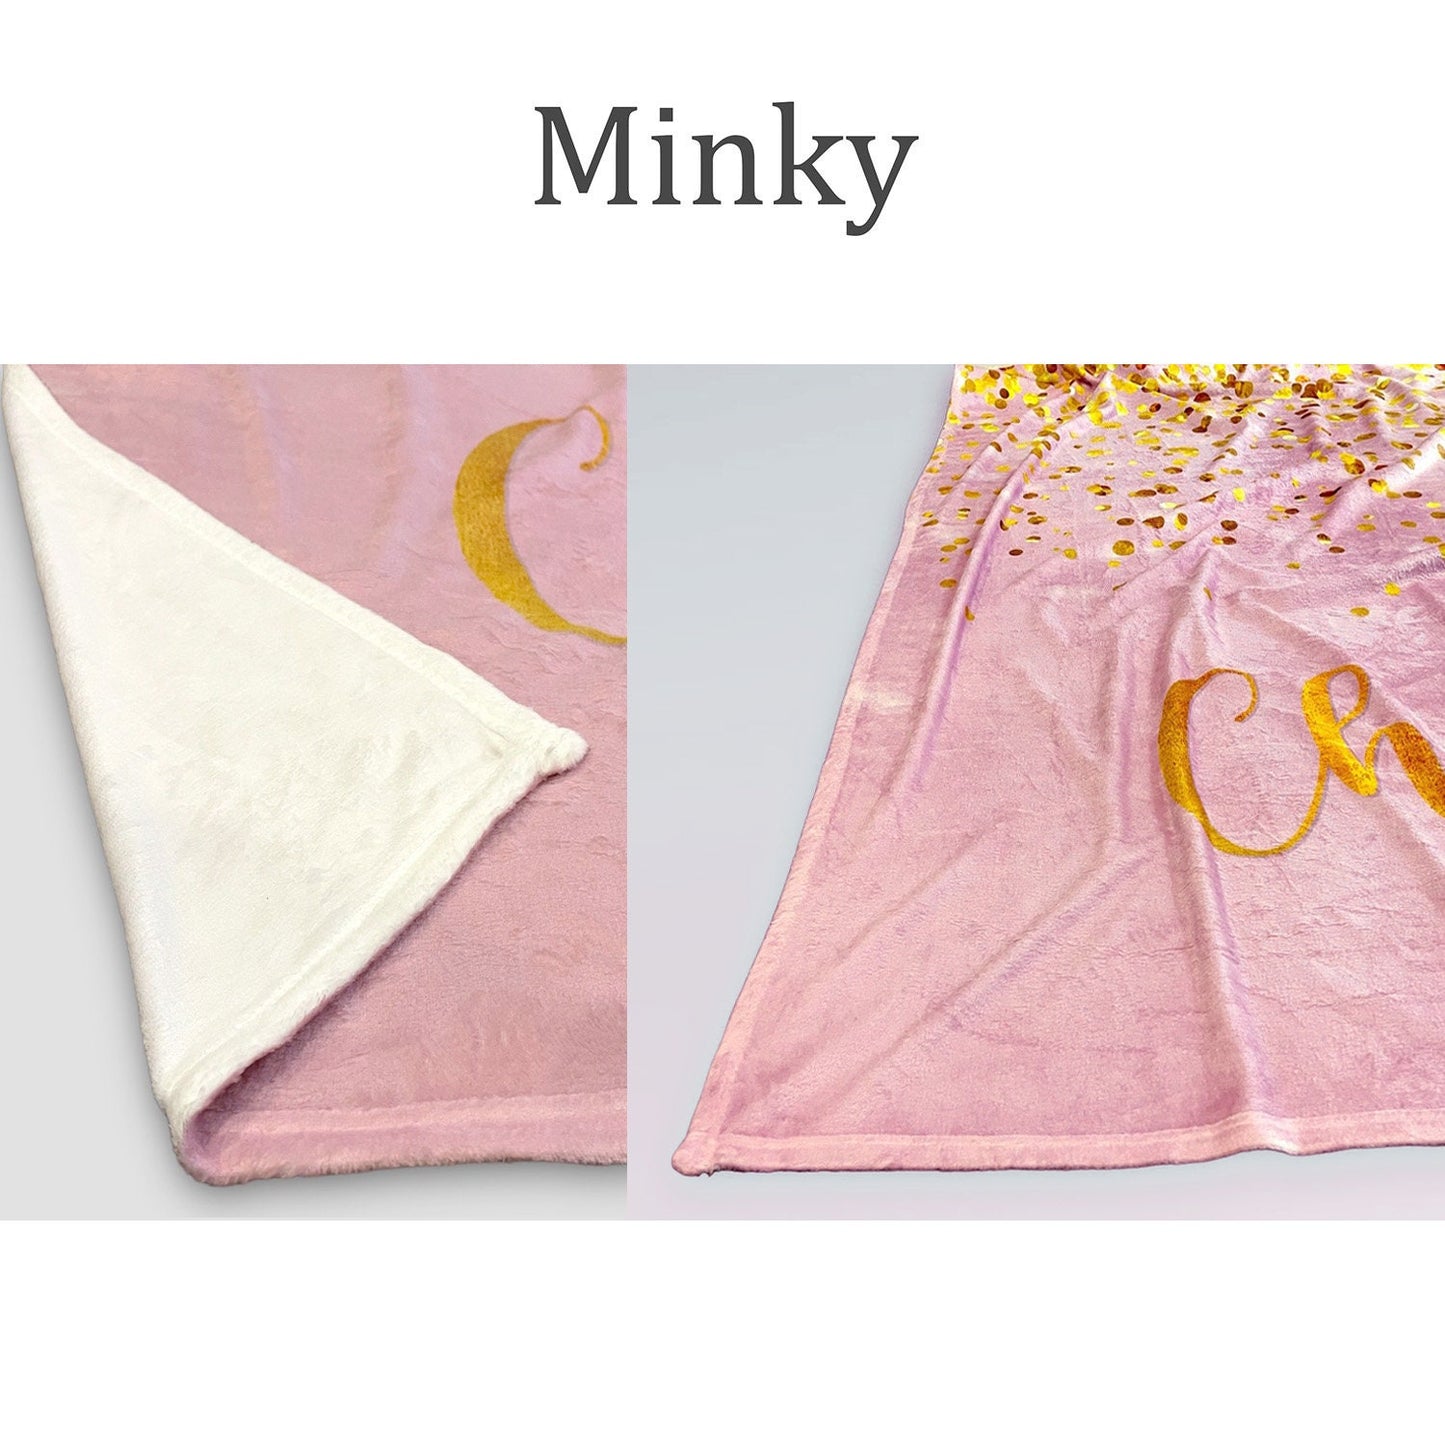 Dinosaur Personalize blanket, Minky or Sherpa custom blanket, Baby blanket, Kids Blanket, birthday gift idea